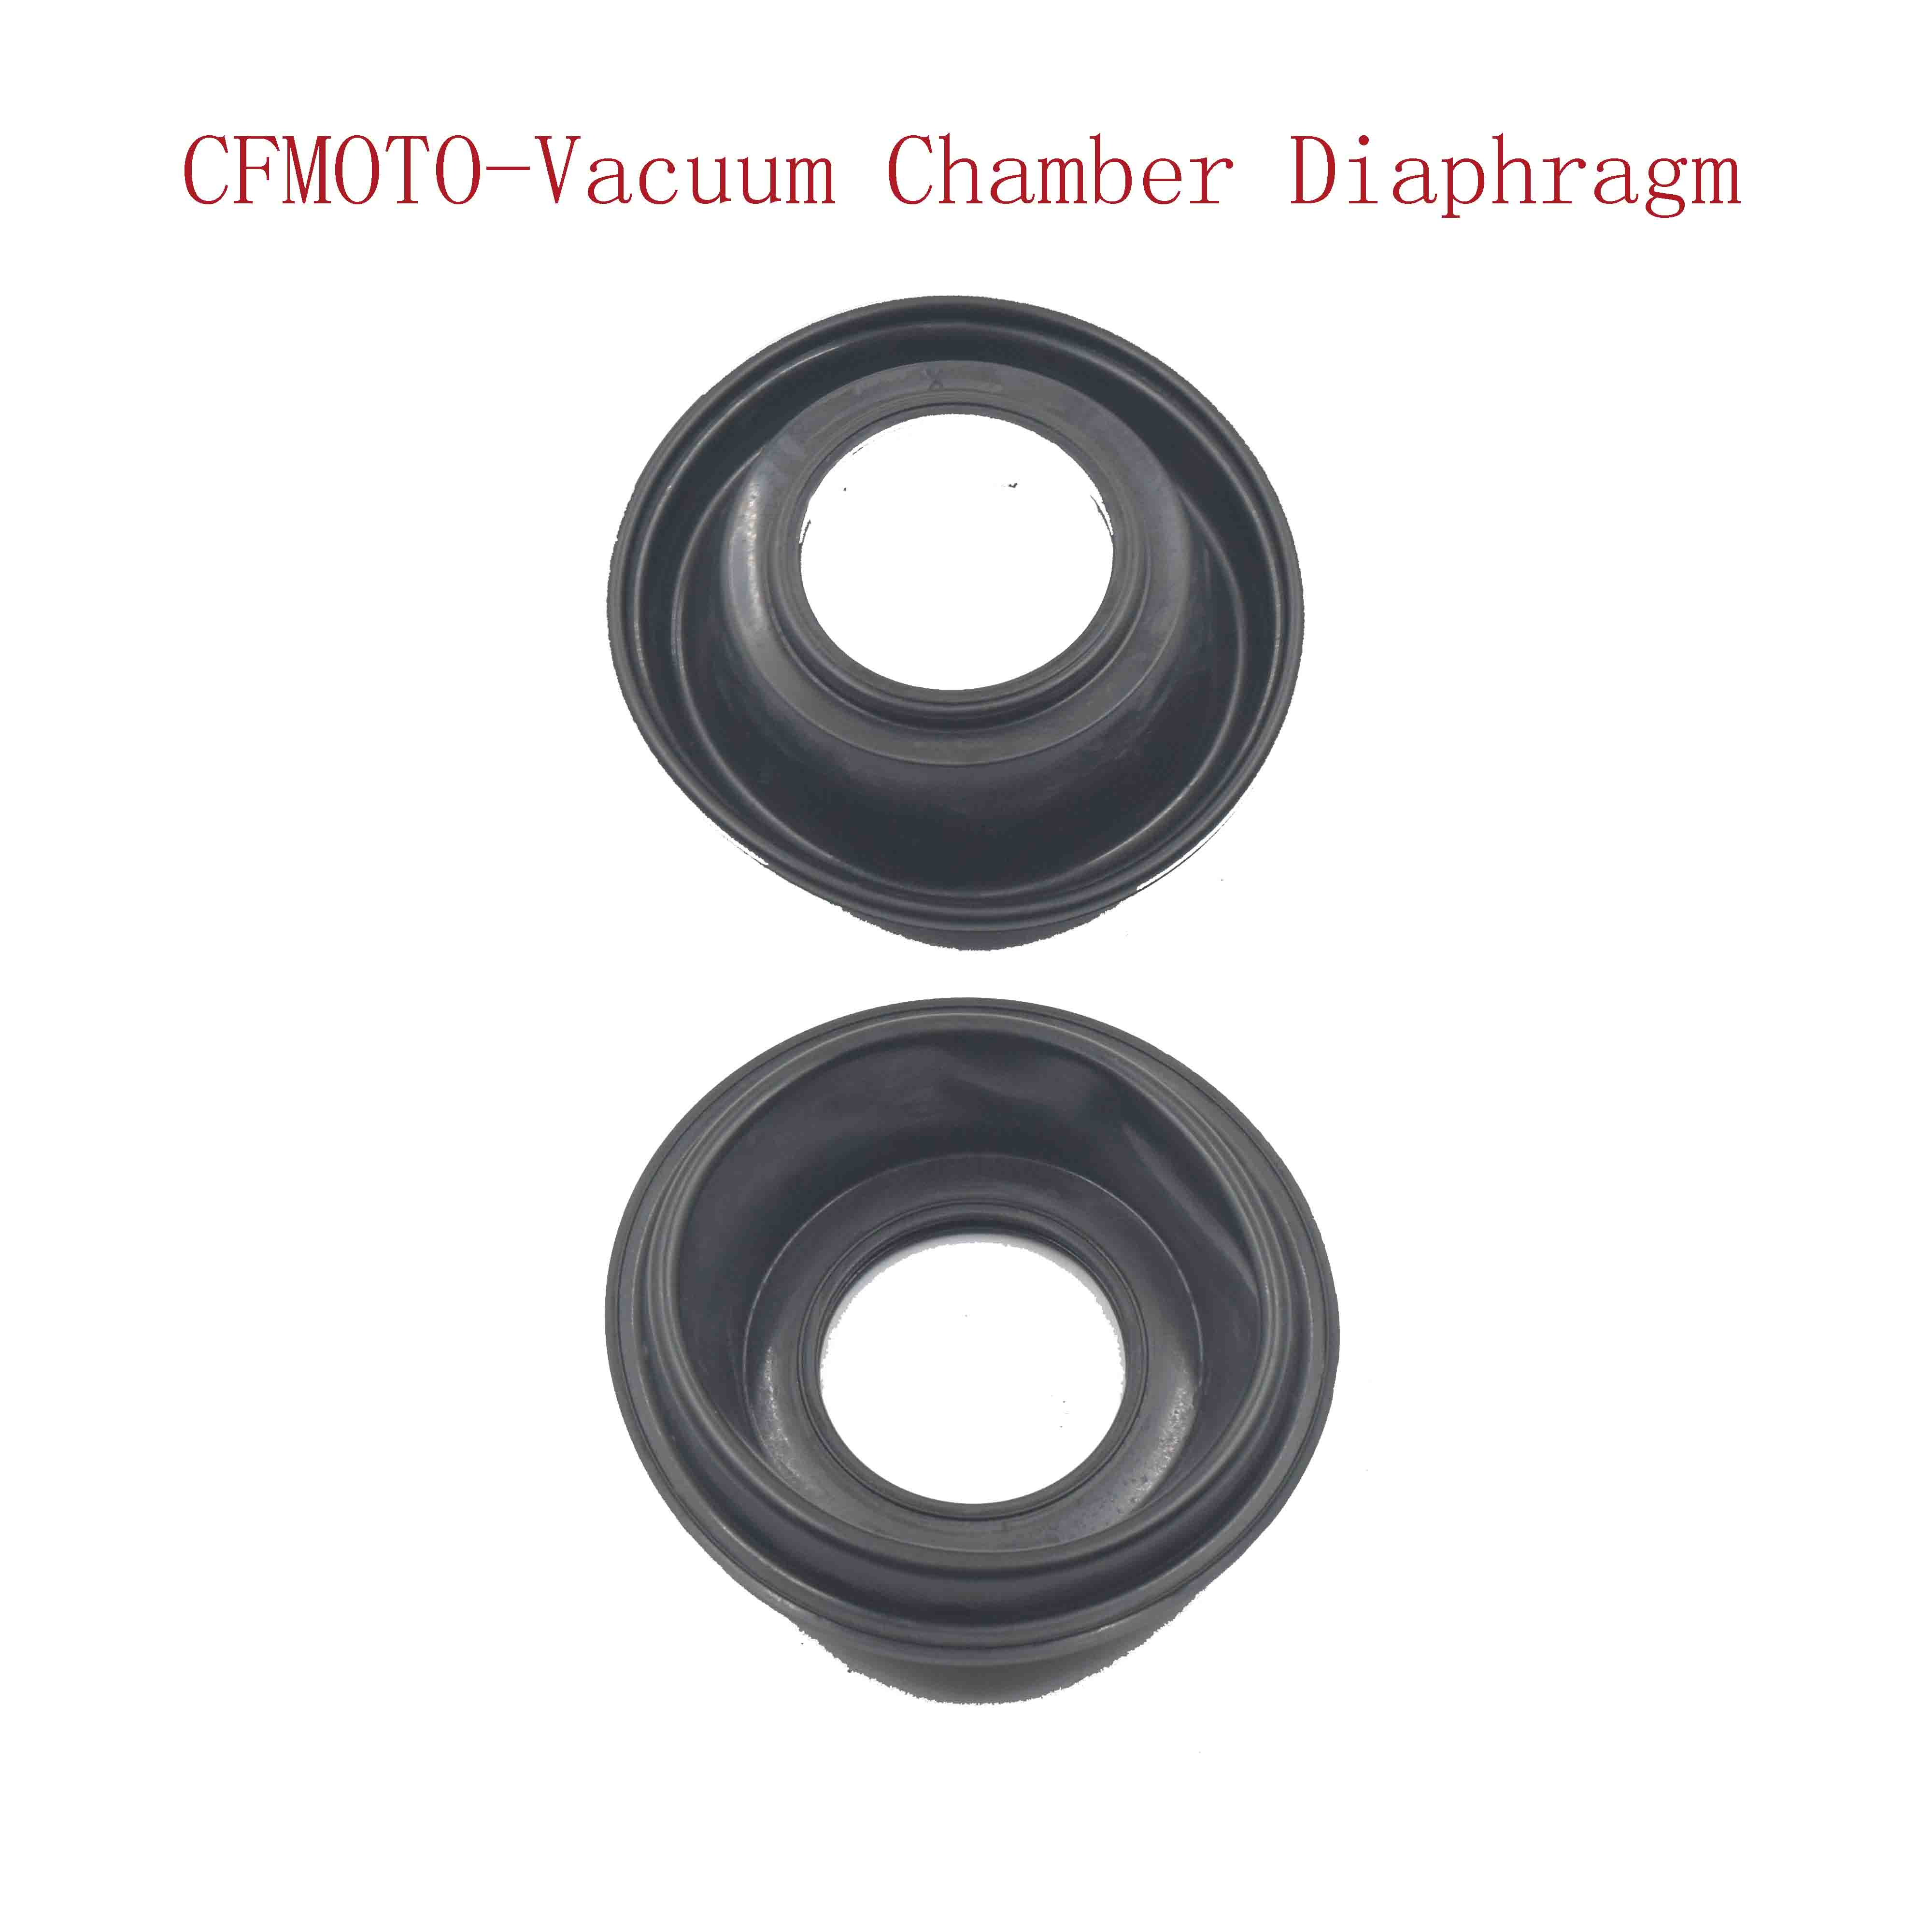 CFMOTO-Vacuum Chamber Diaphragm 